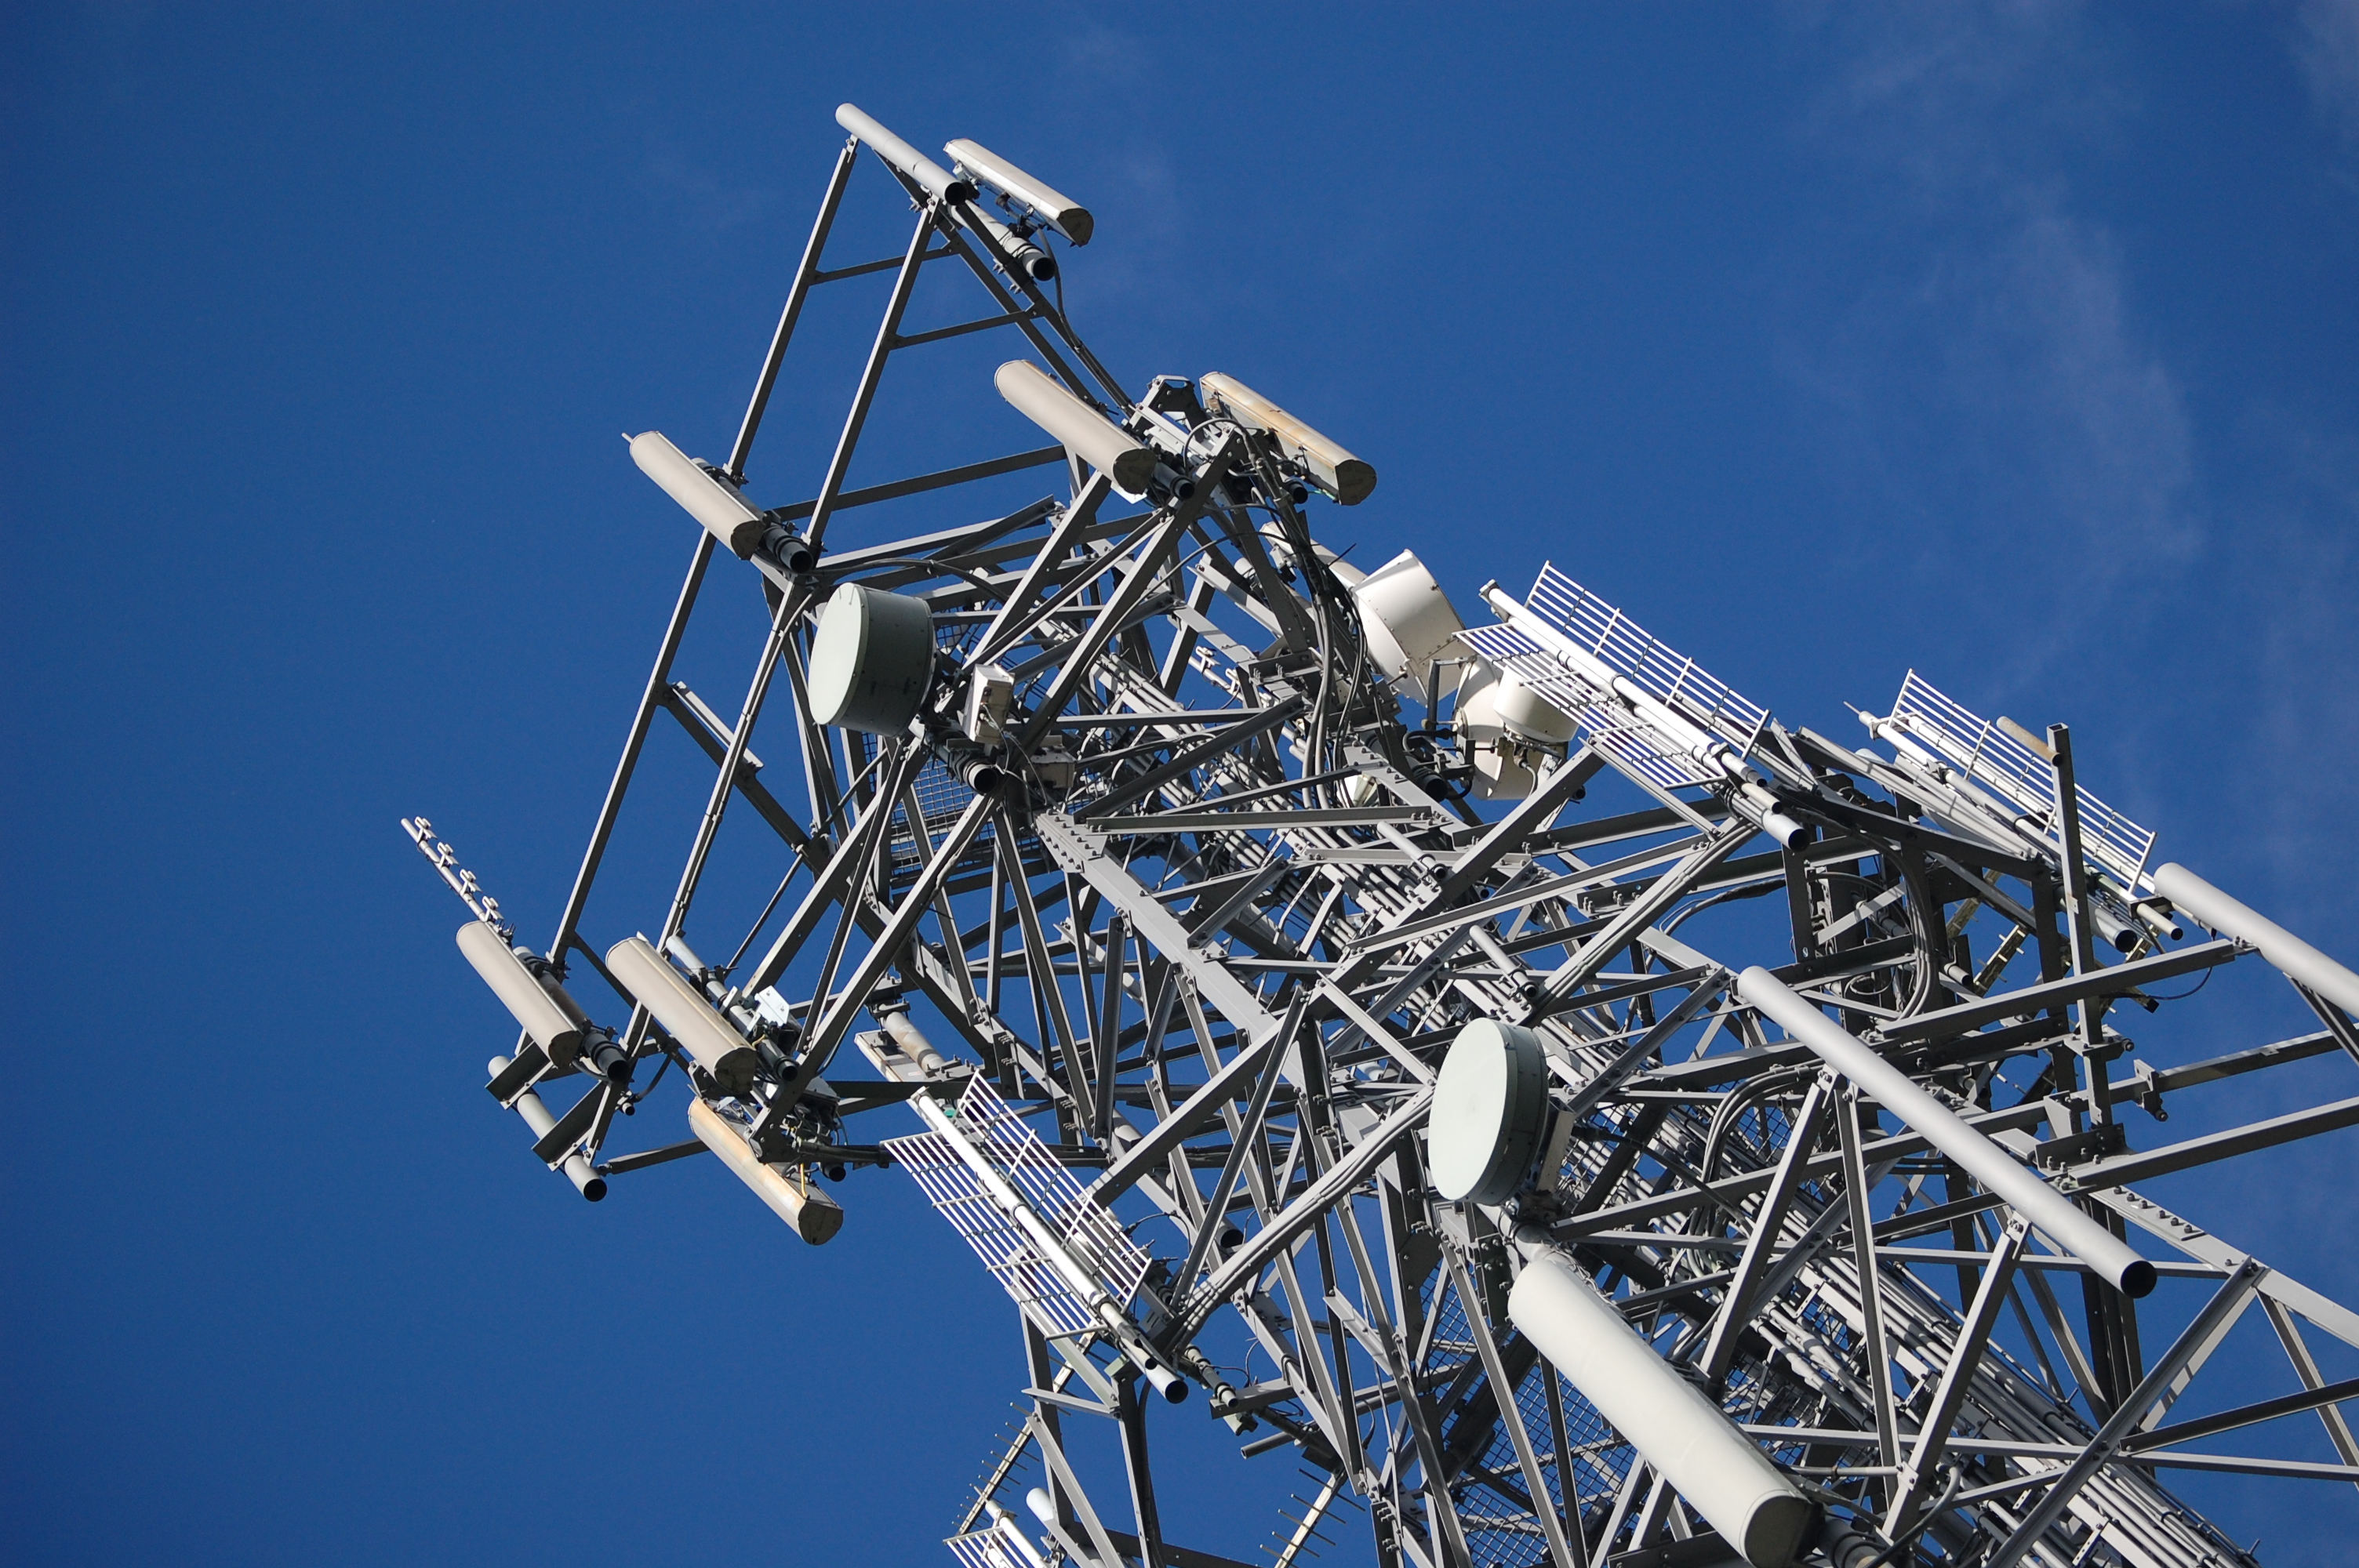 Telecoms mast